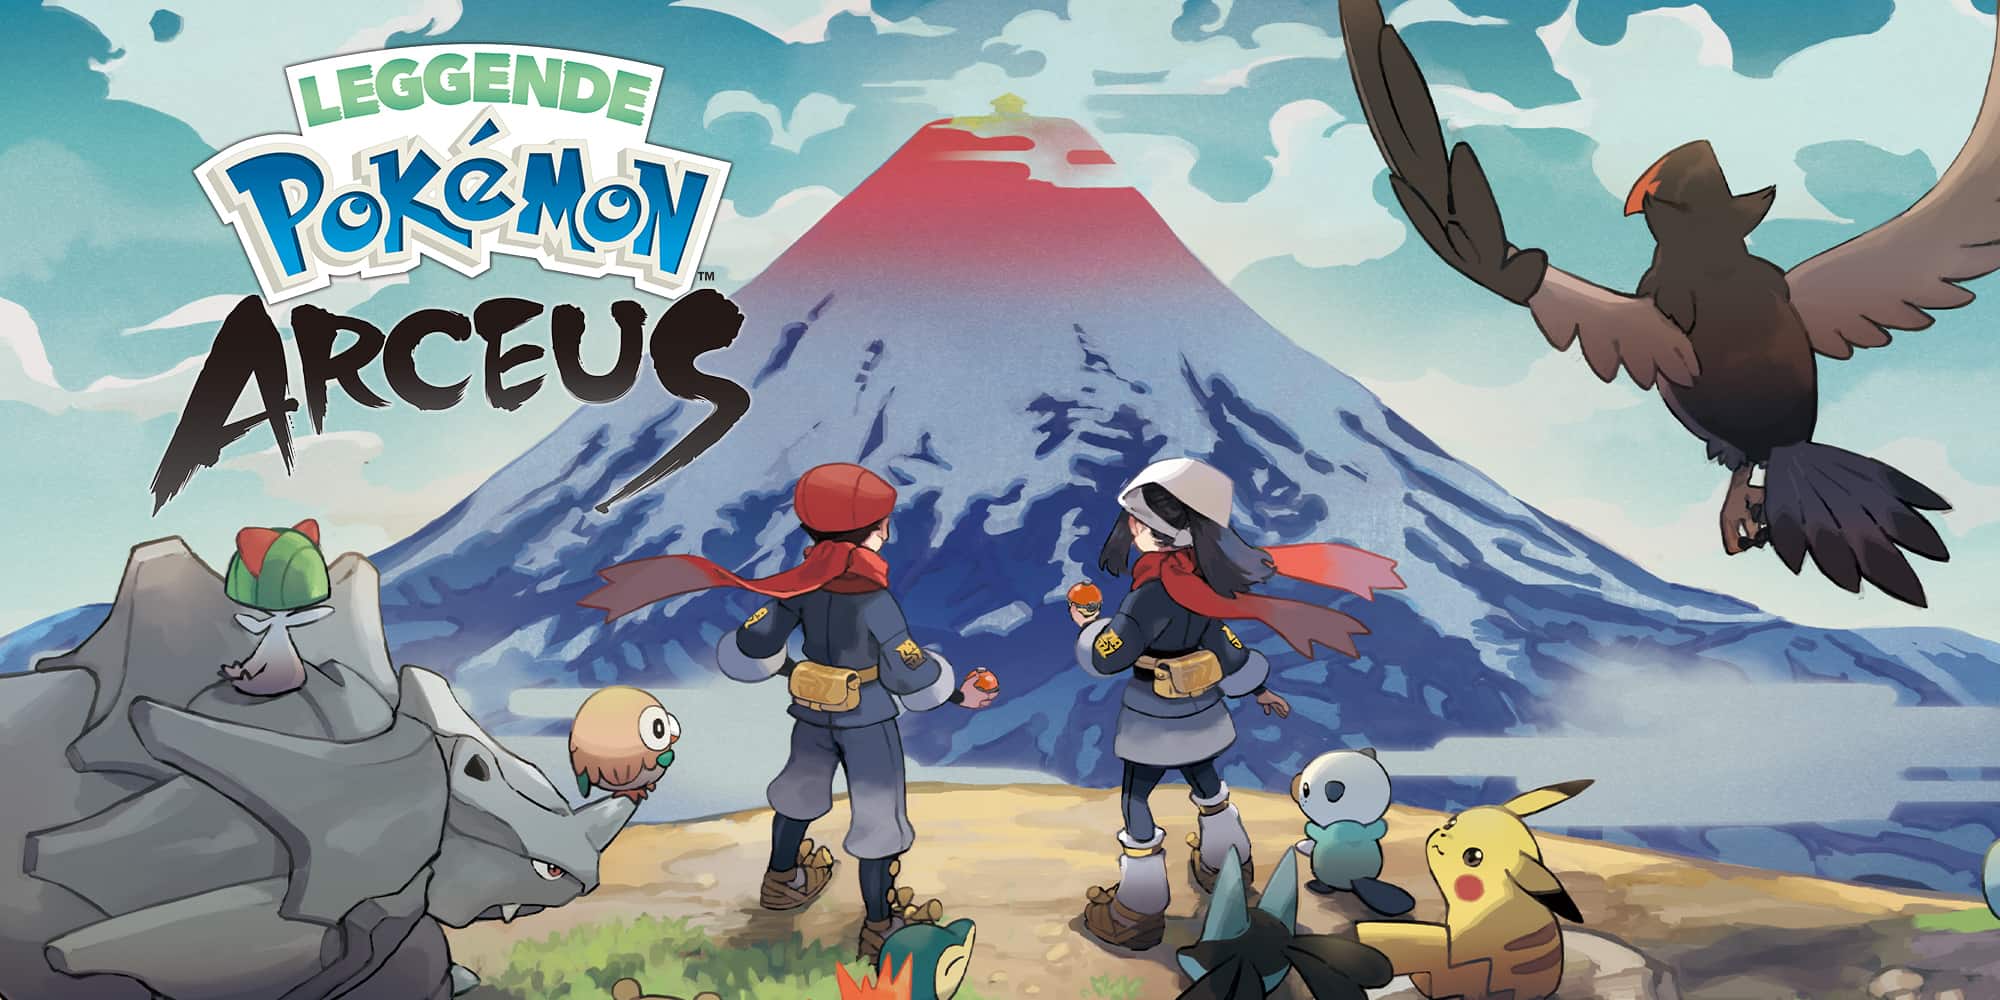 Leggende Pokémon: Arceus, svelato un nuovo trailer